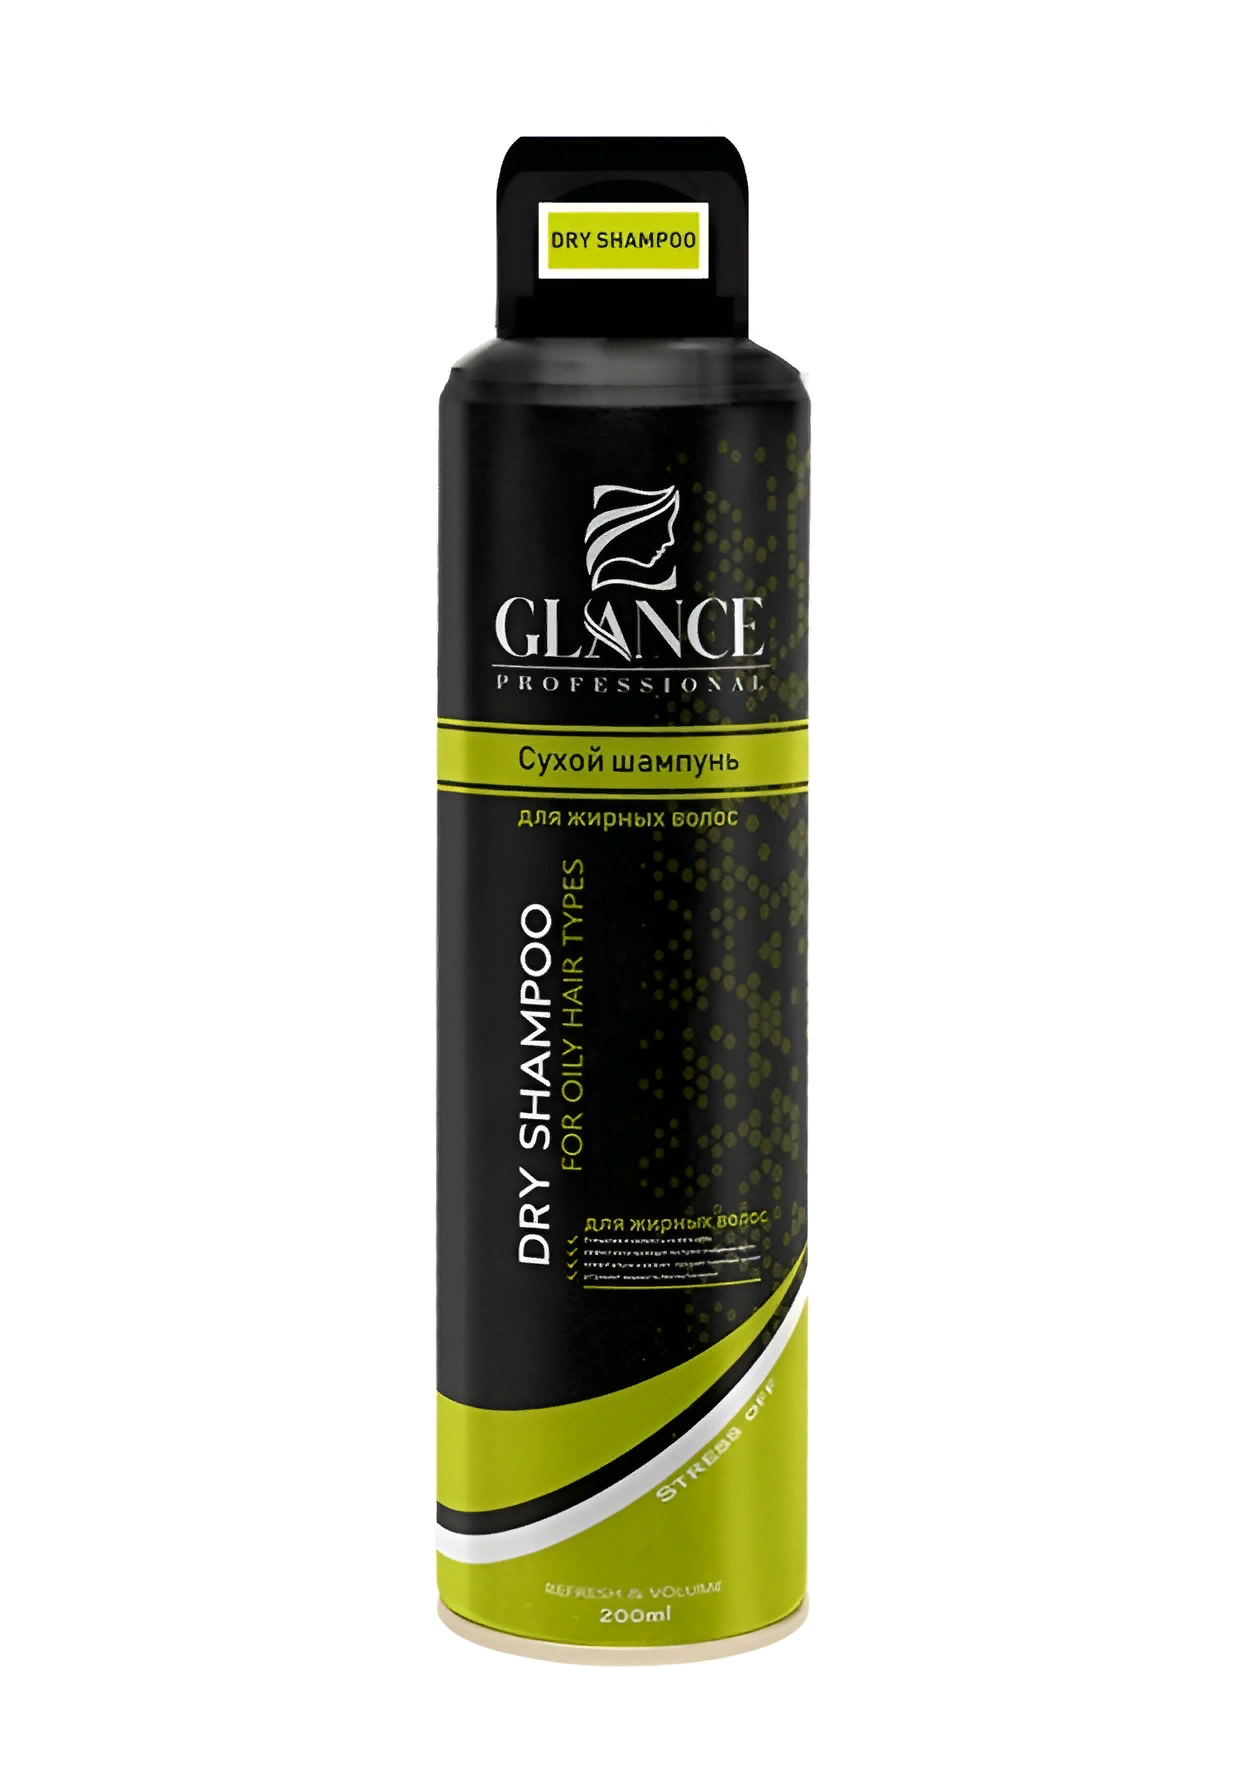 Сухой шампунь Glance Professional Для жирных волос 200мл сухой шампунь purebess spray nowaiting dry shampoo sweet 200мл